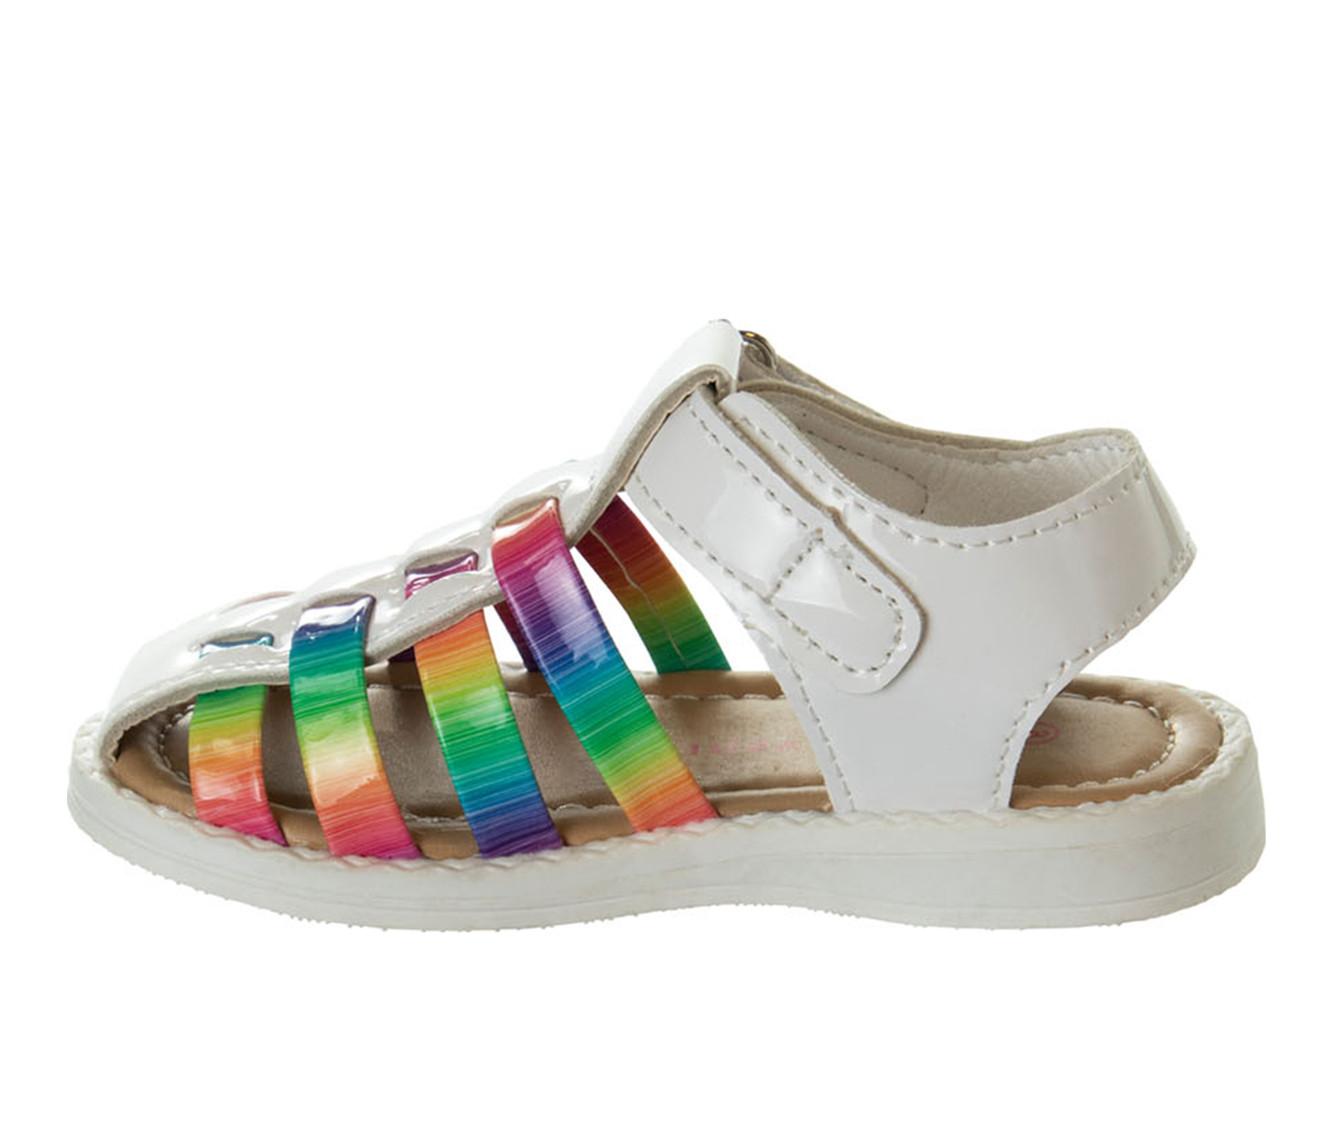 Girls' Laura Ashley Toddler Rainbow Radiance Sandals